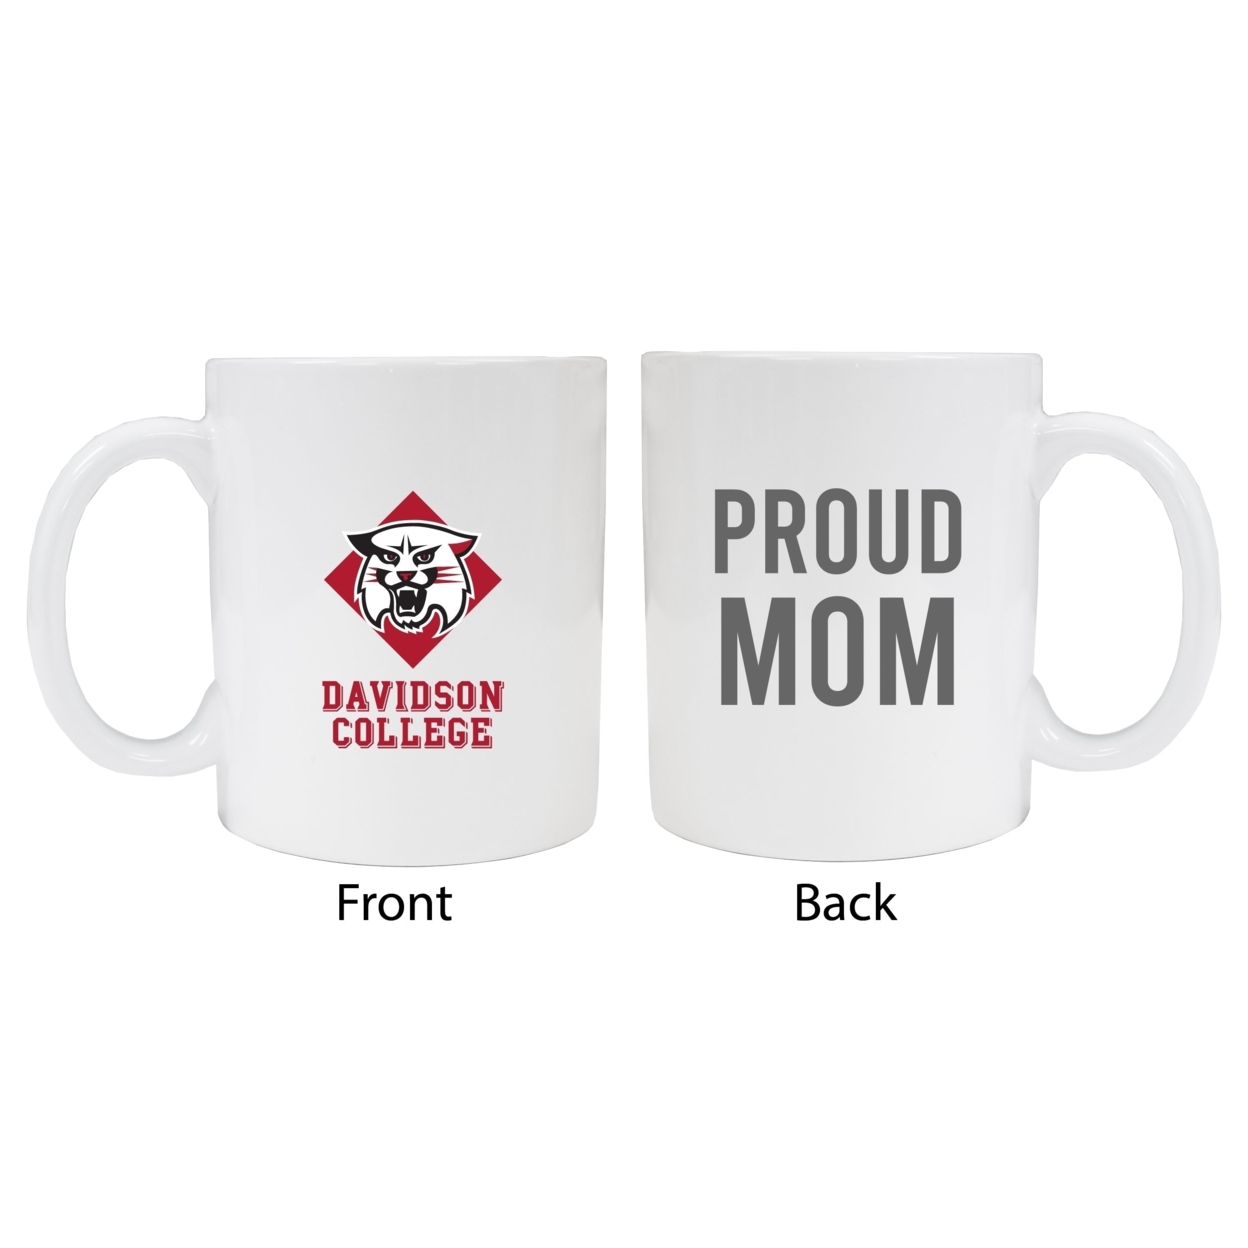 Davidson College Proud Mom Ceramic Coffee Mug - White